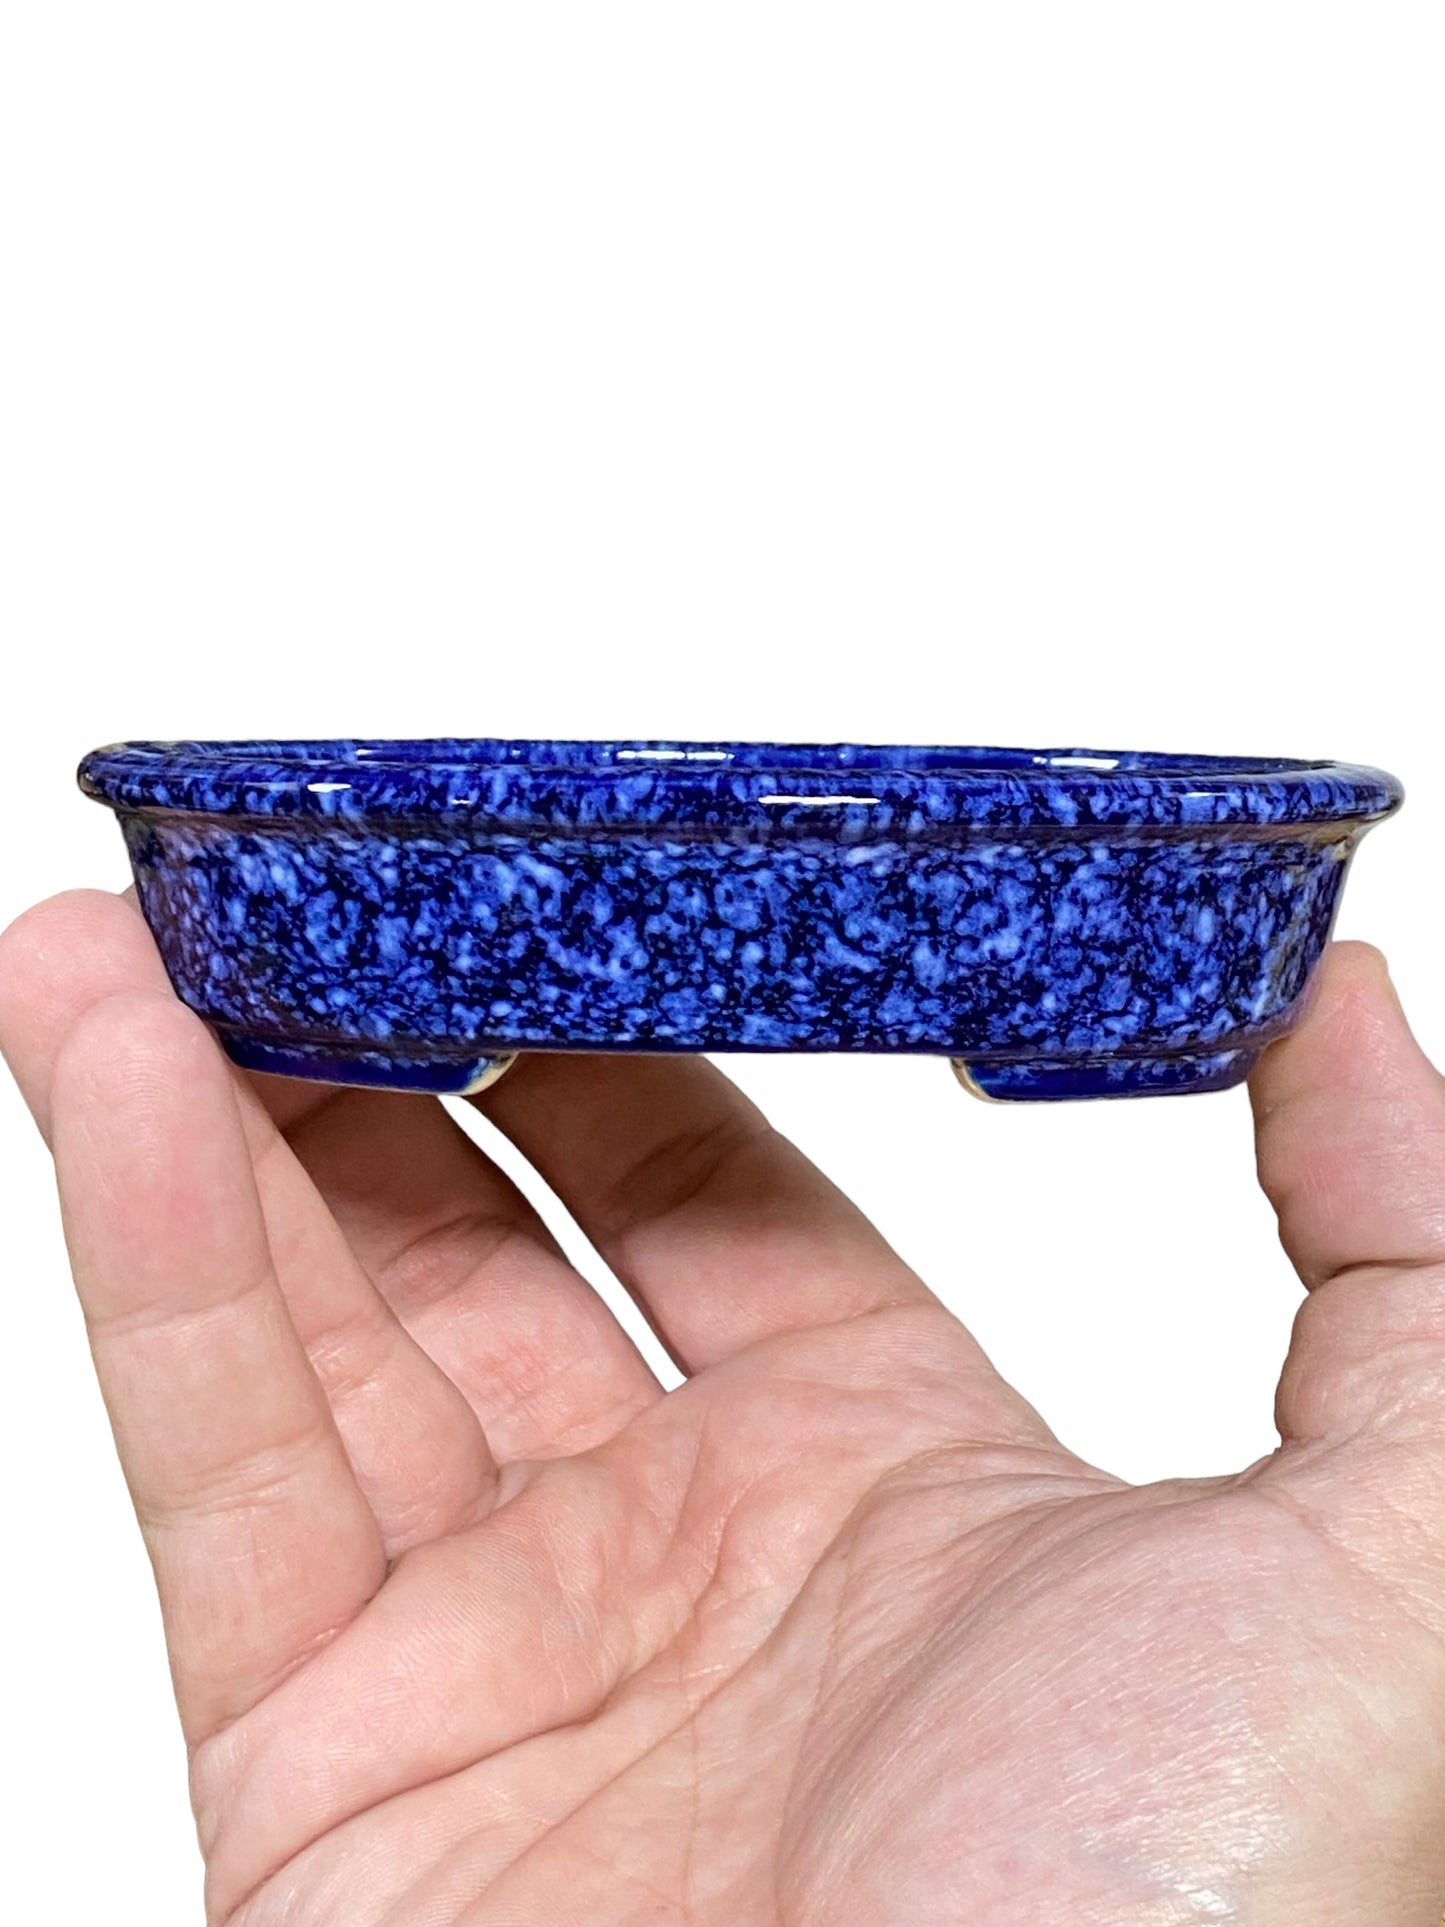 Koyo - Blue & White Glazed Shohin Oval Bonsai Pot